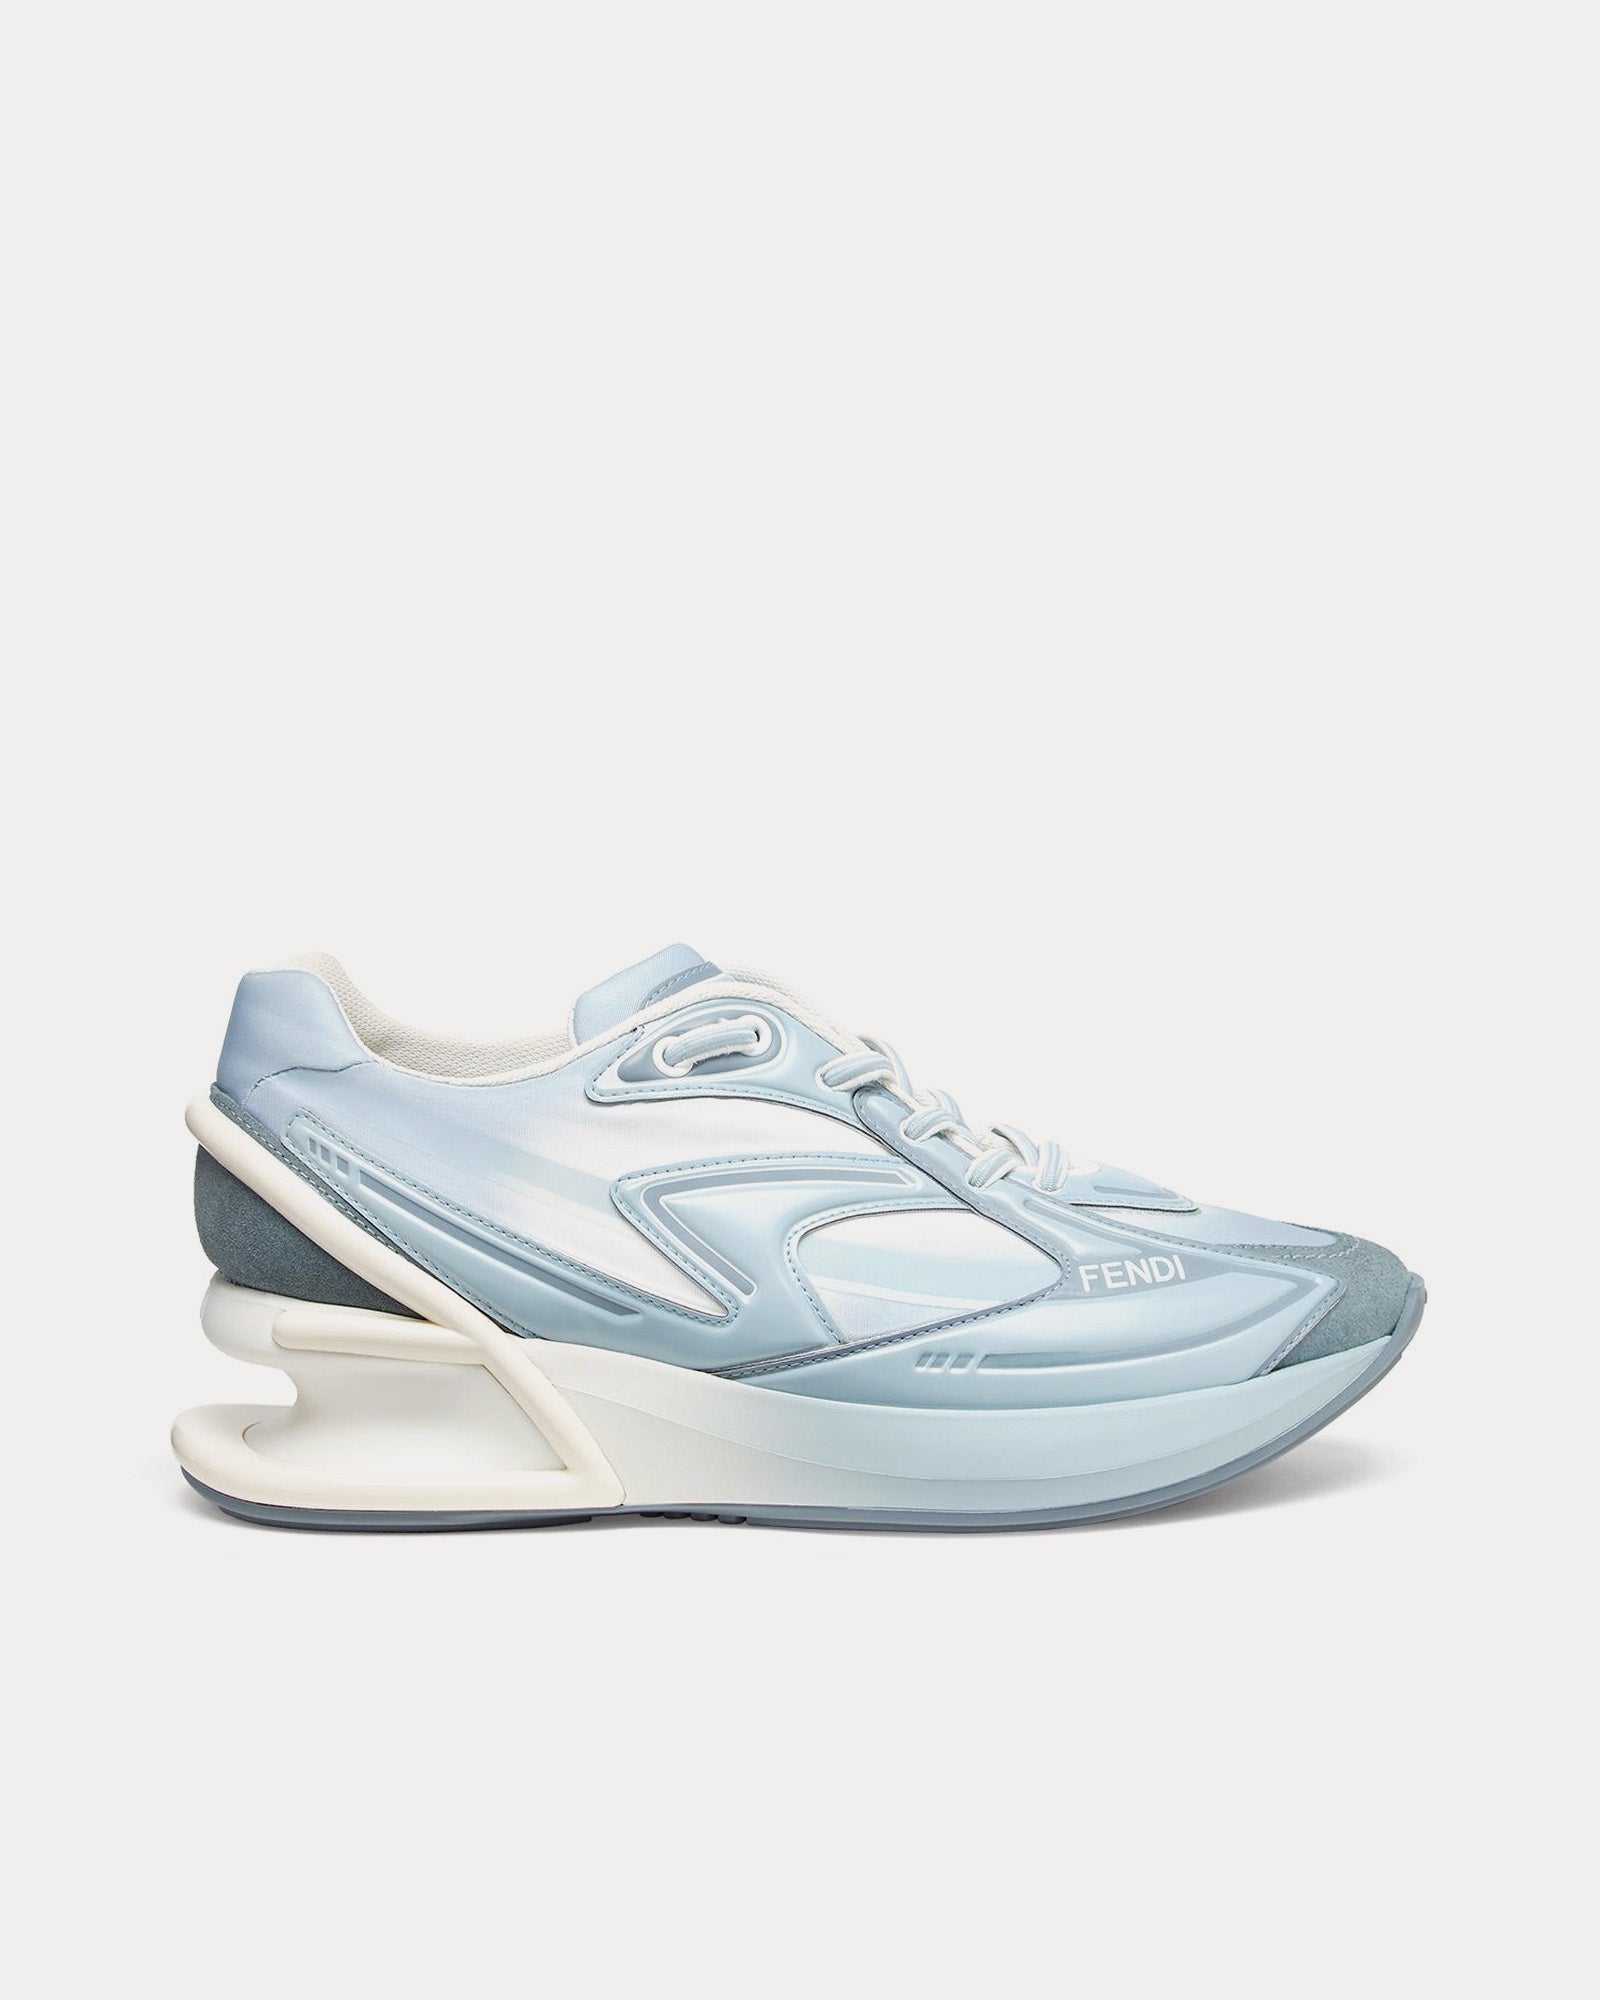 Fendi - First 1 Nylon Blue Low Top Sneakers